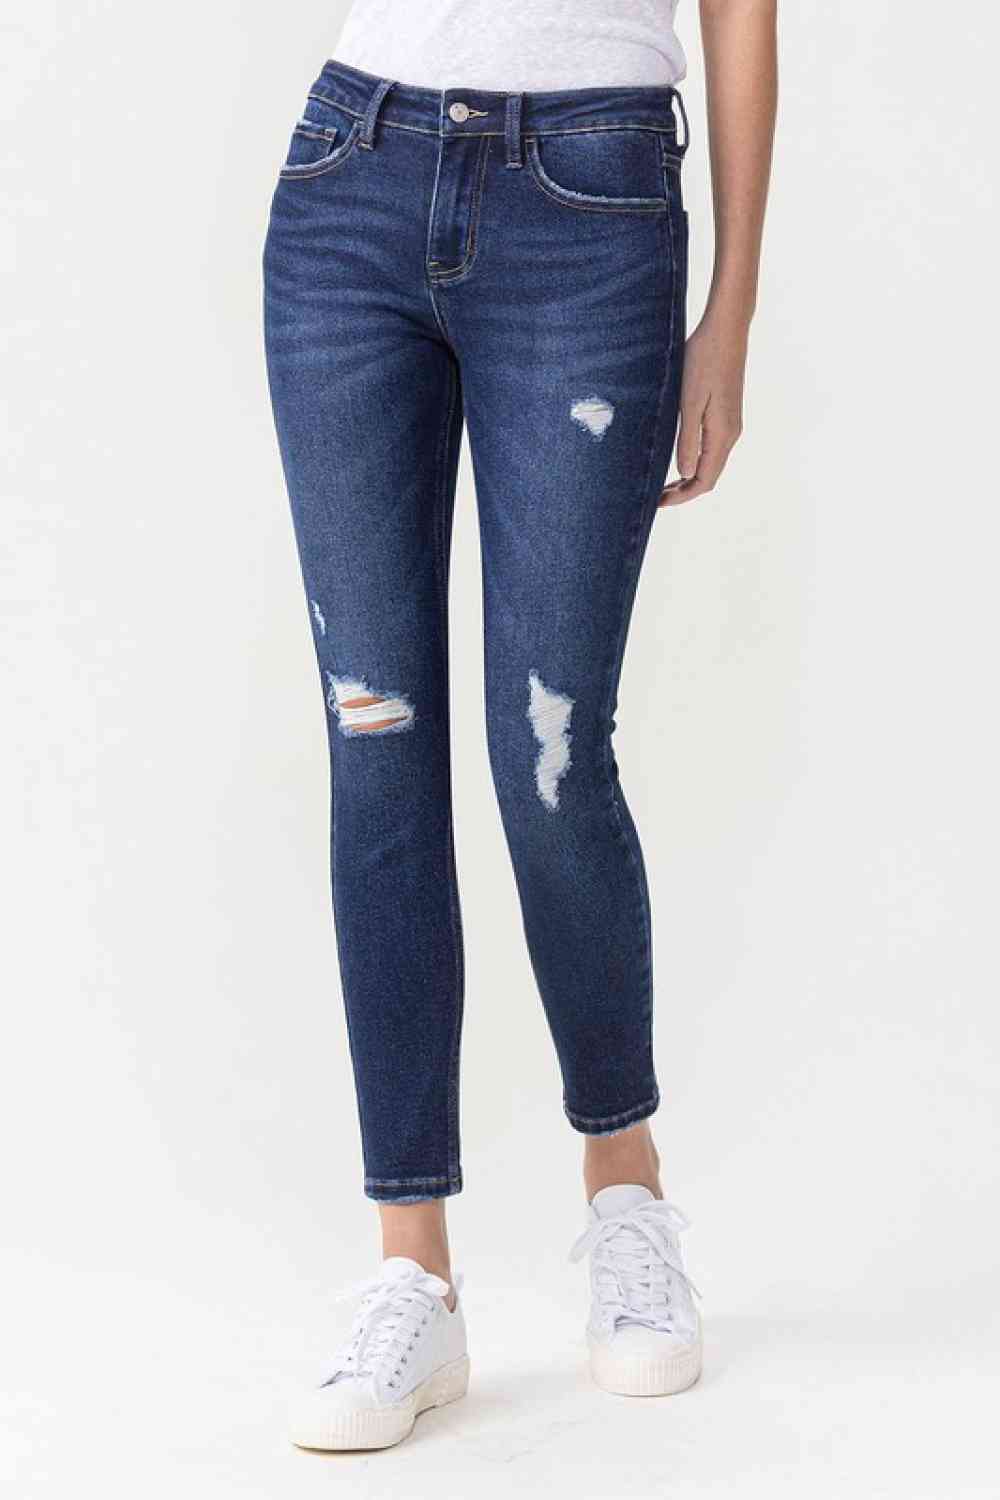 Chelsea Lovervet Midrise Crop Skinny Jeans